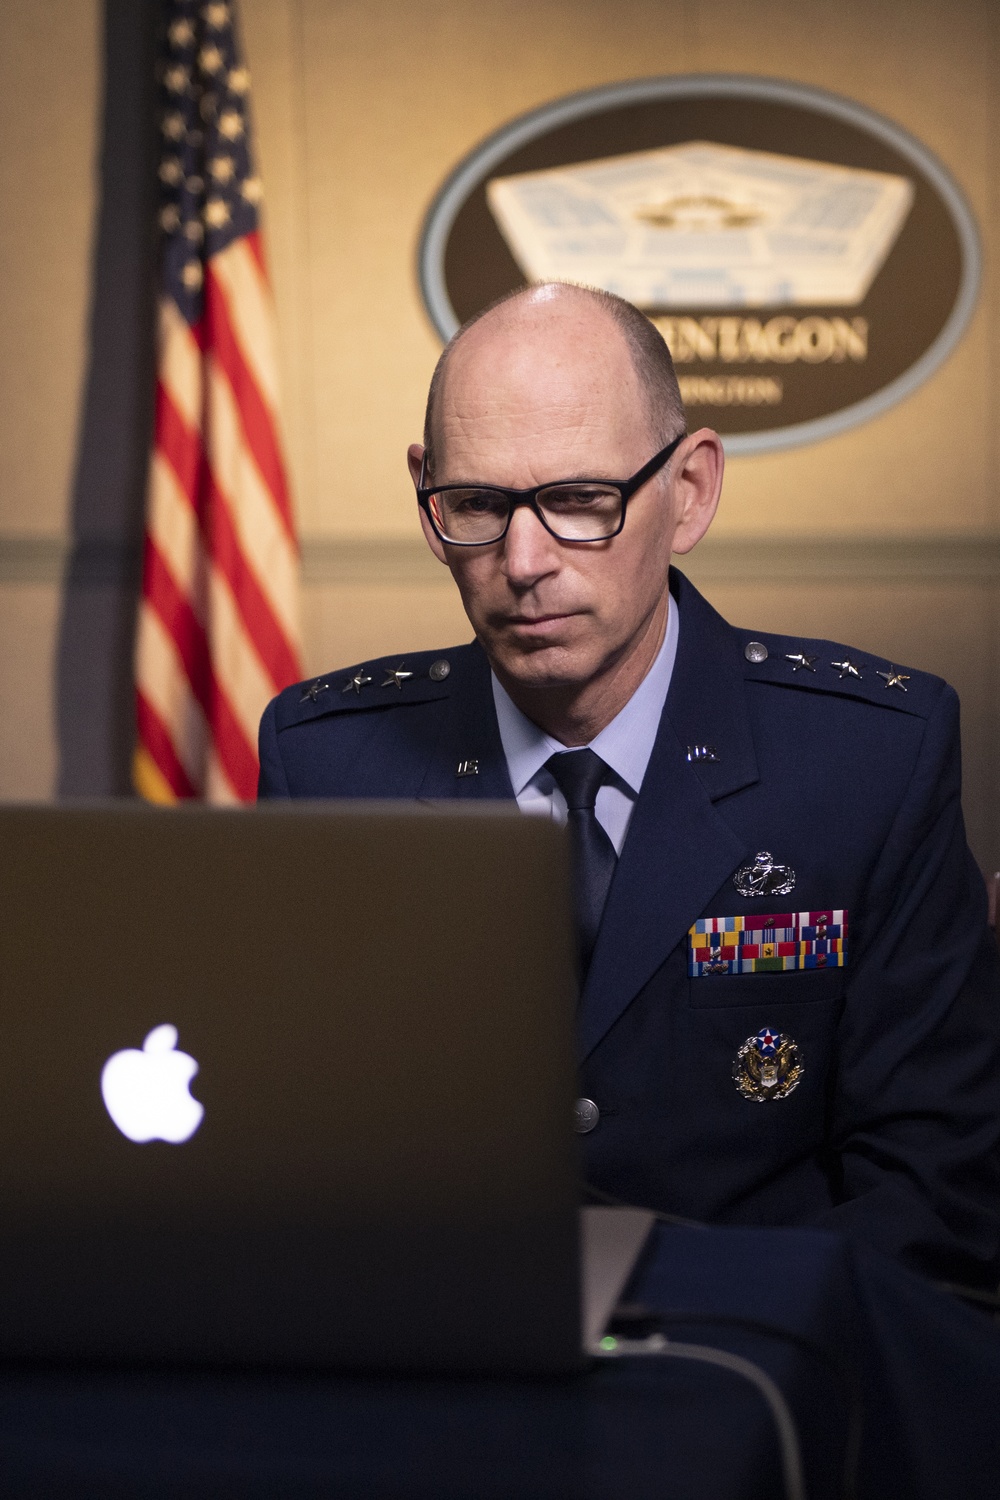 DVIDS - Images - Lt. Gen. Duke Z. Richardson speaks at a virtual AFA ...